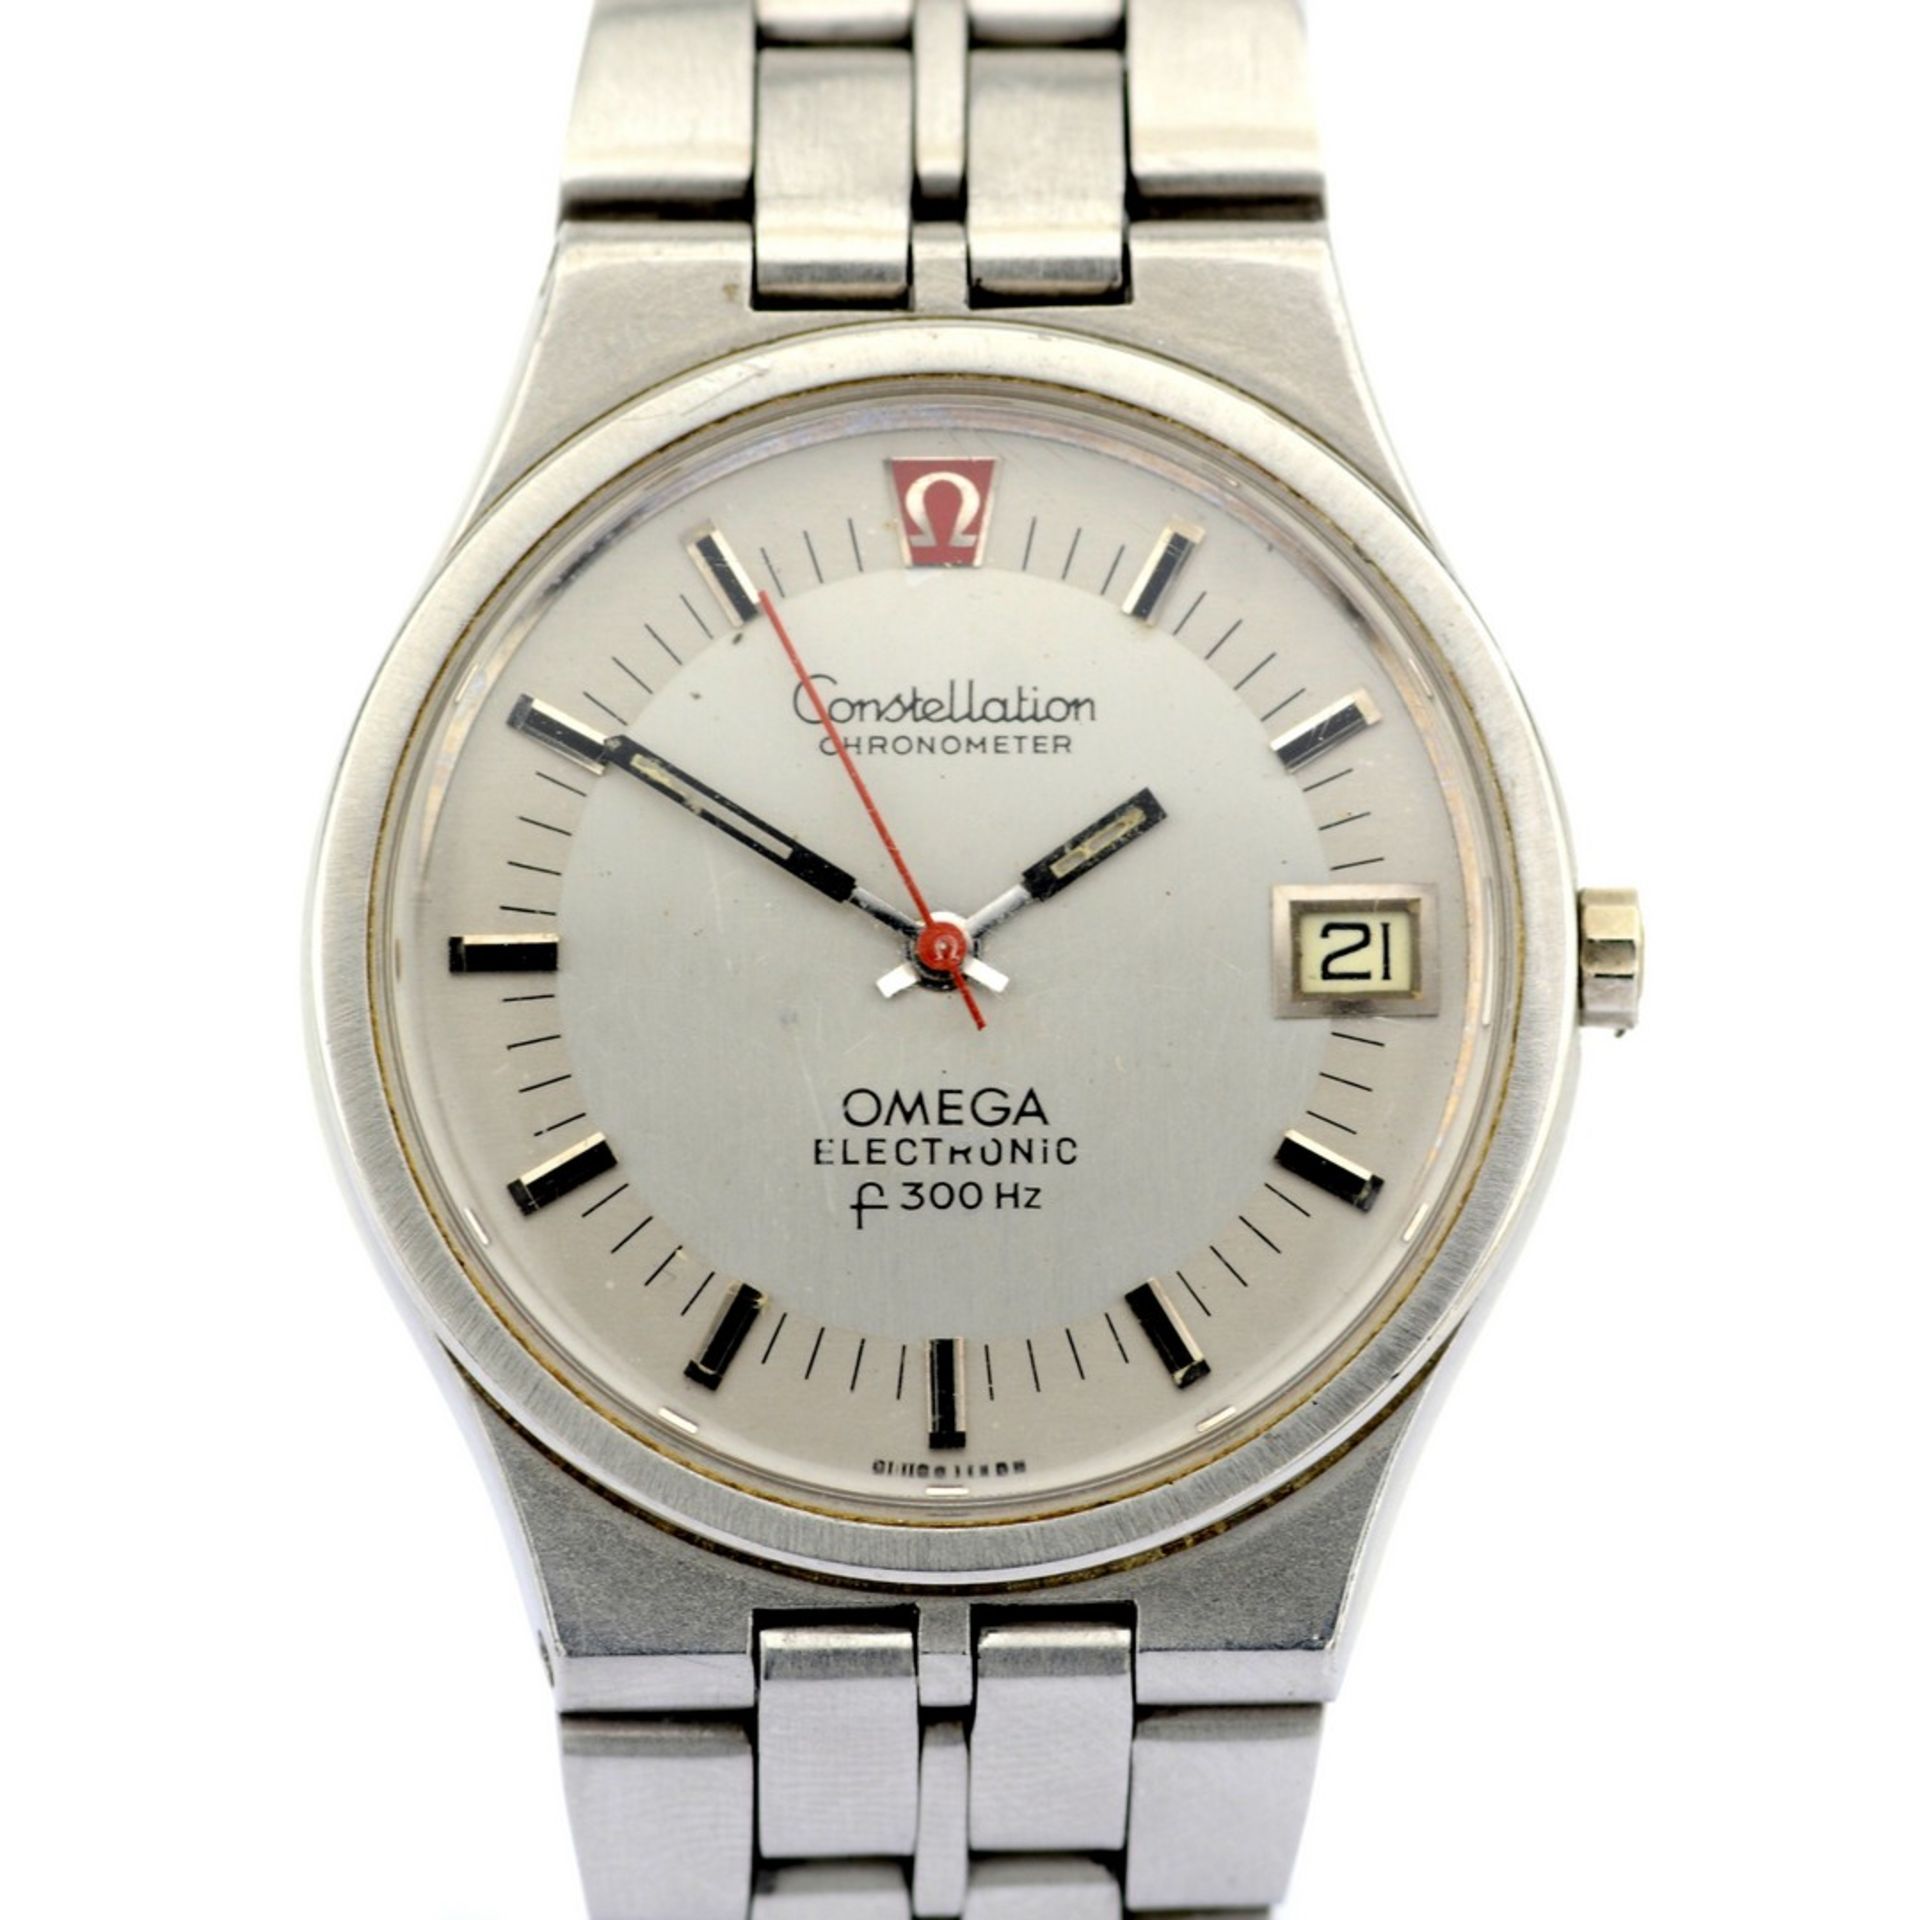 Omega / Constellation Chronometer Electronic f300Hz Date 36 mm - Gentlmen's Steel Wrist Watch - Image 6 of 6